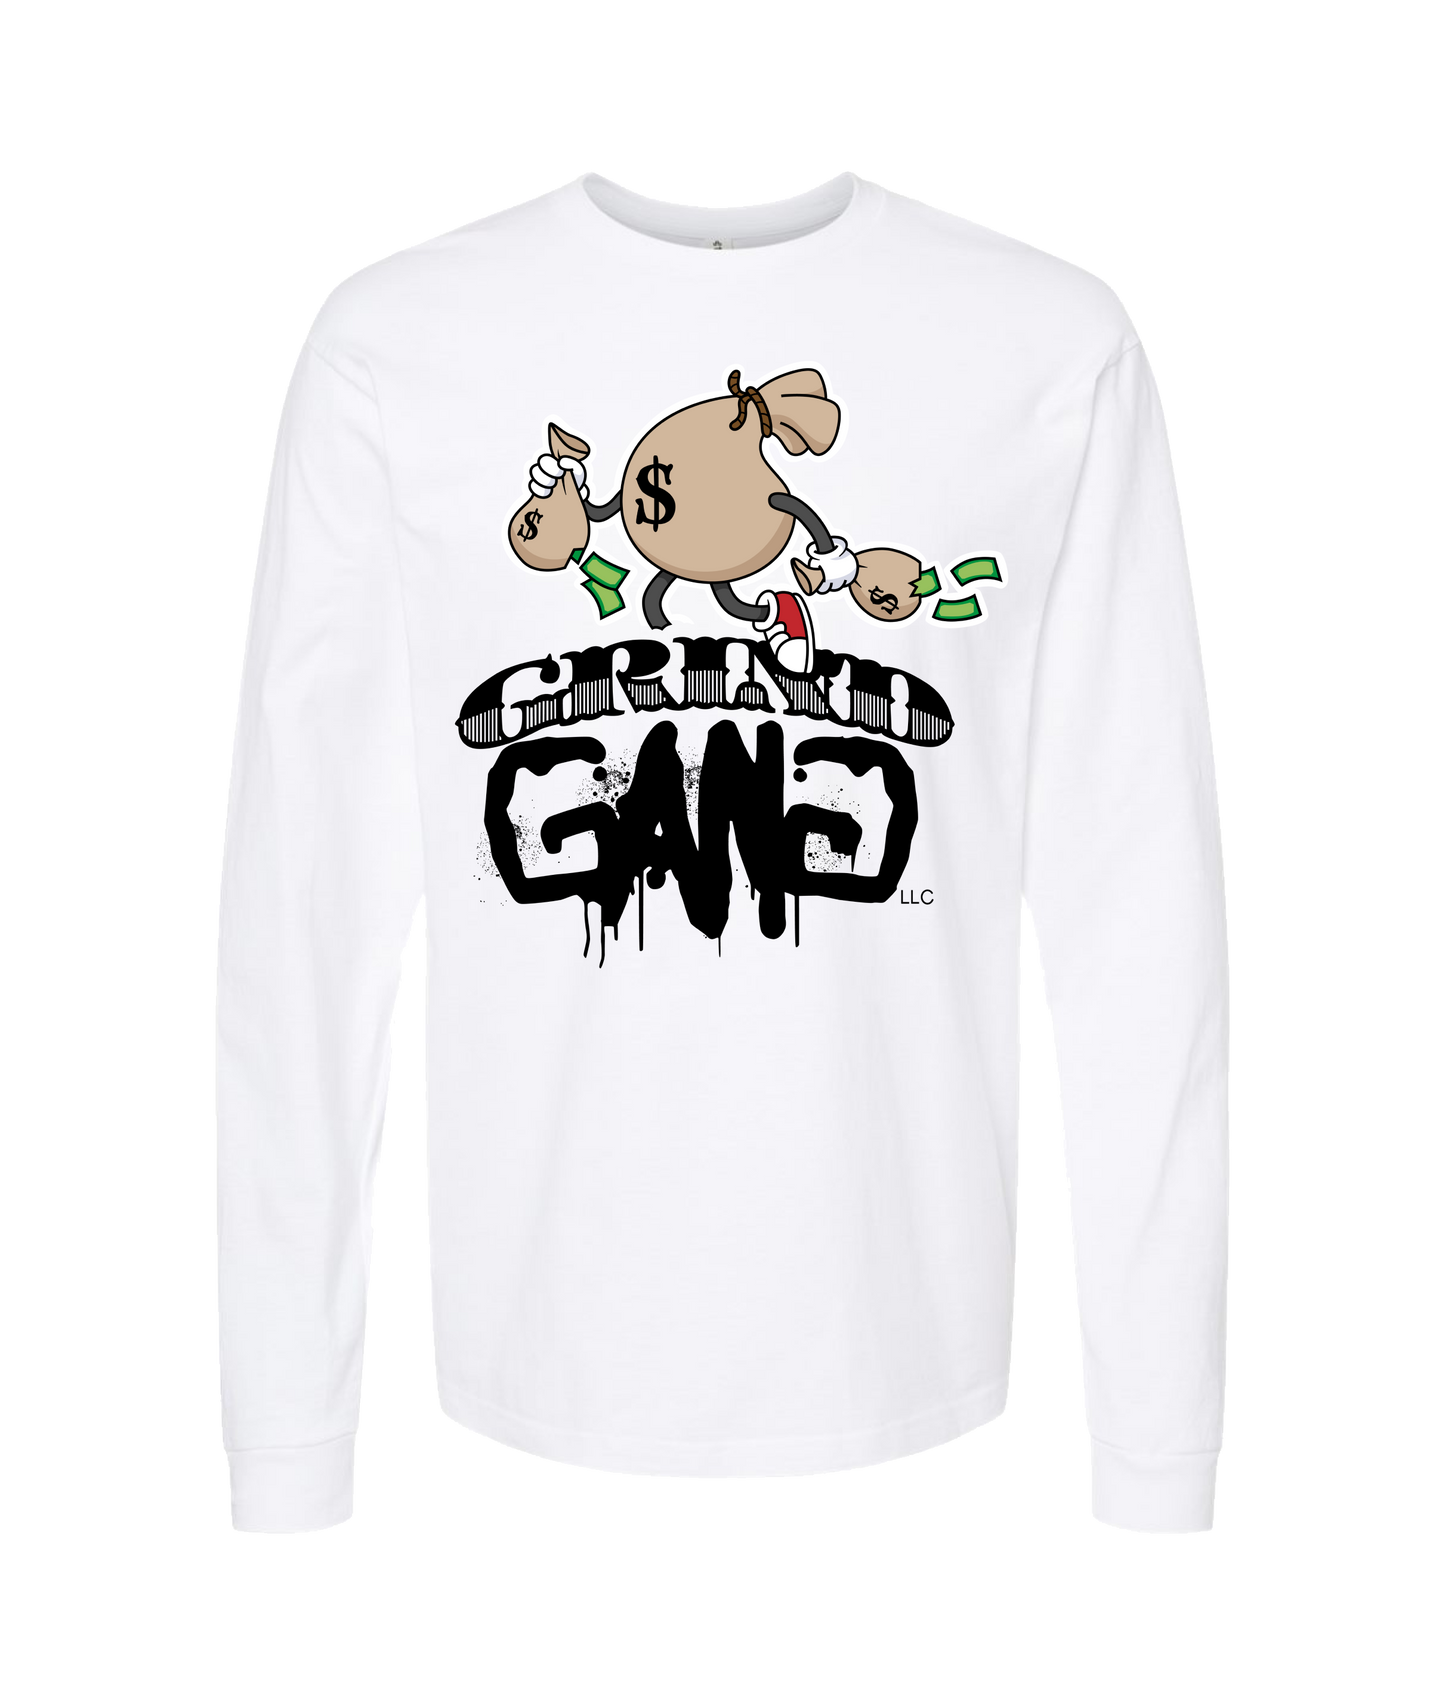 GRIND GANG ENT. LLC - MONEY BAG LOGO 1 - White Long Sleeve T